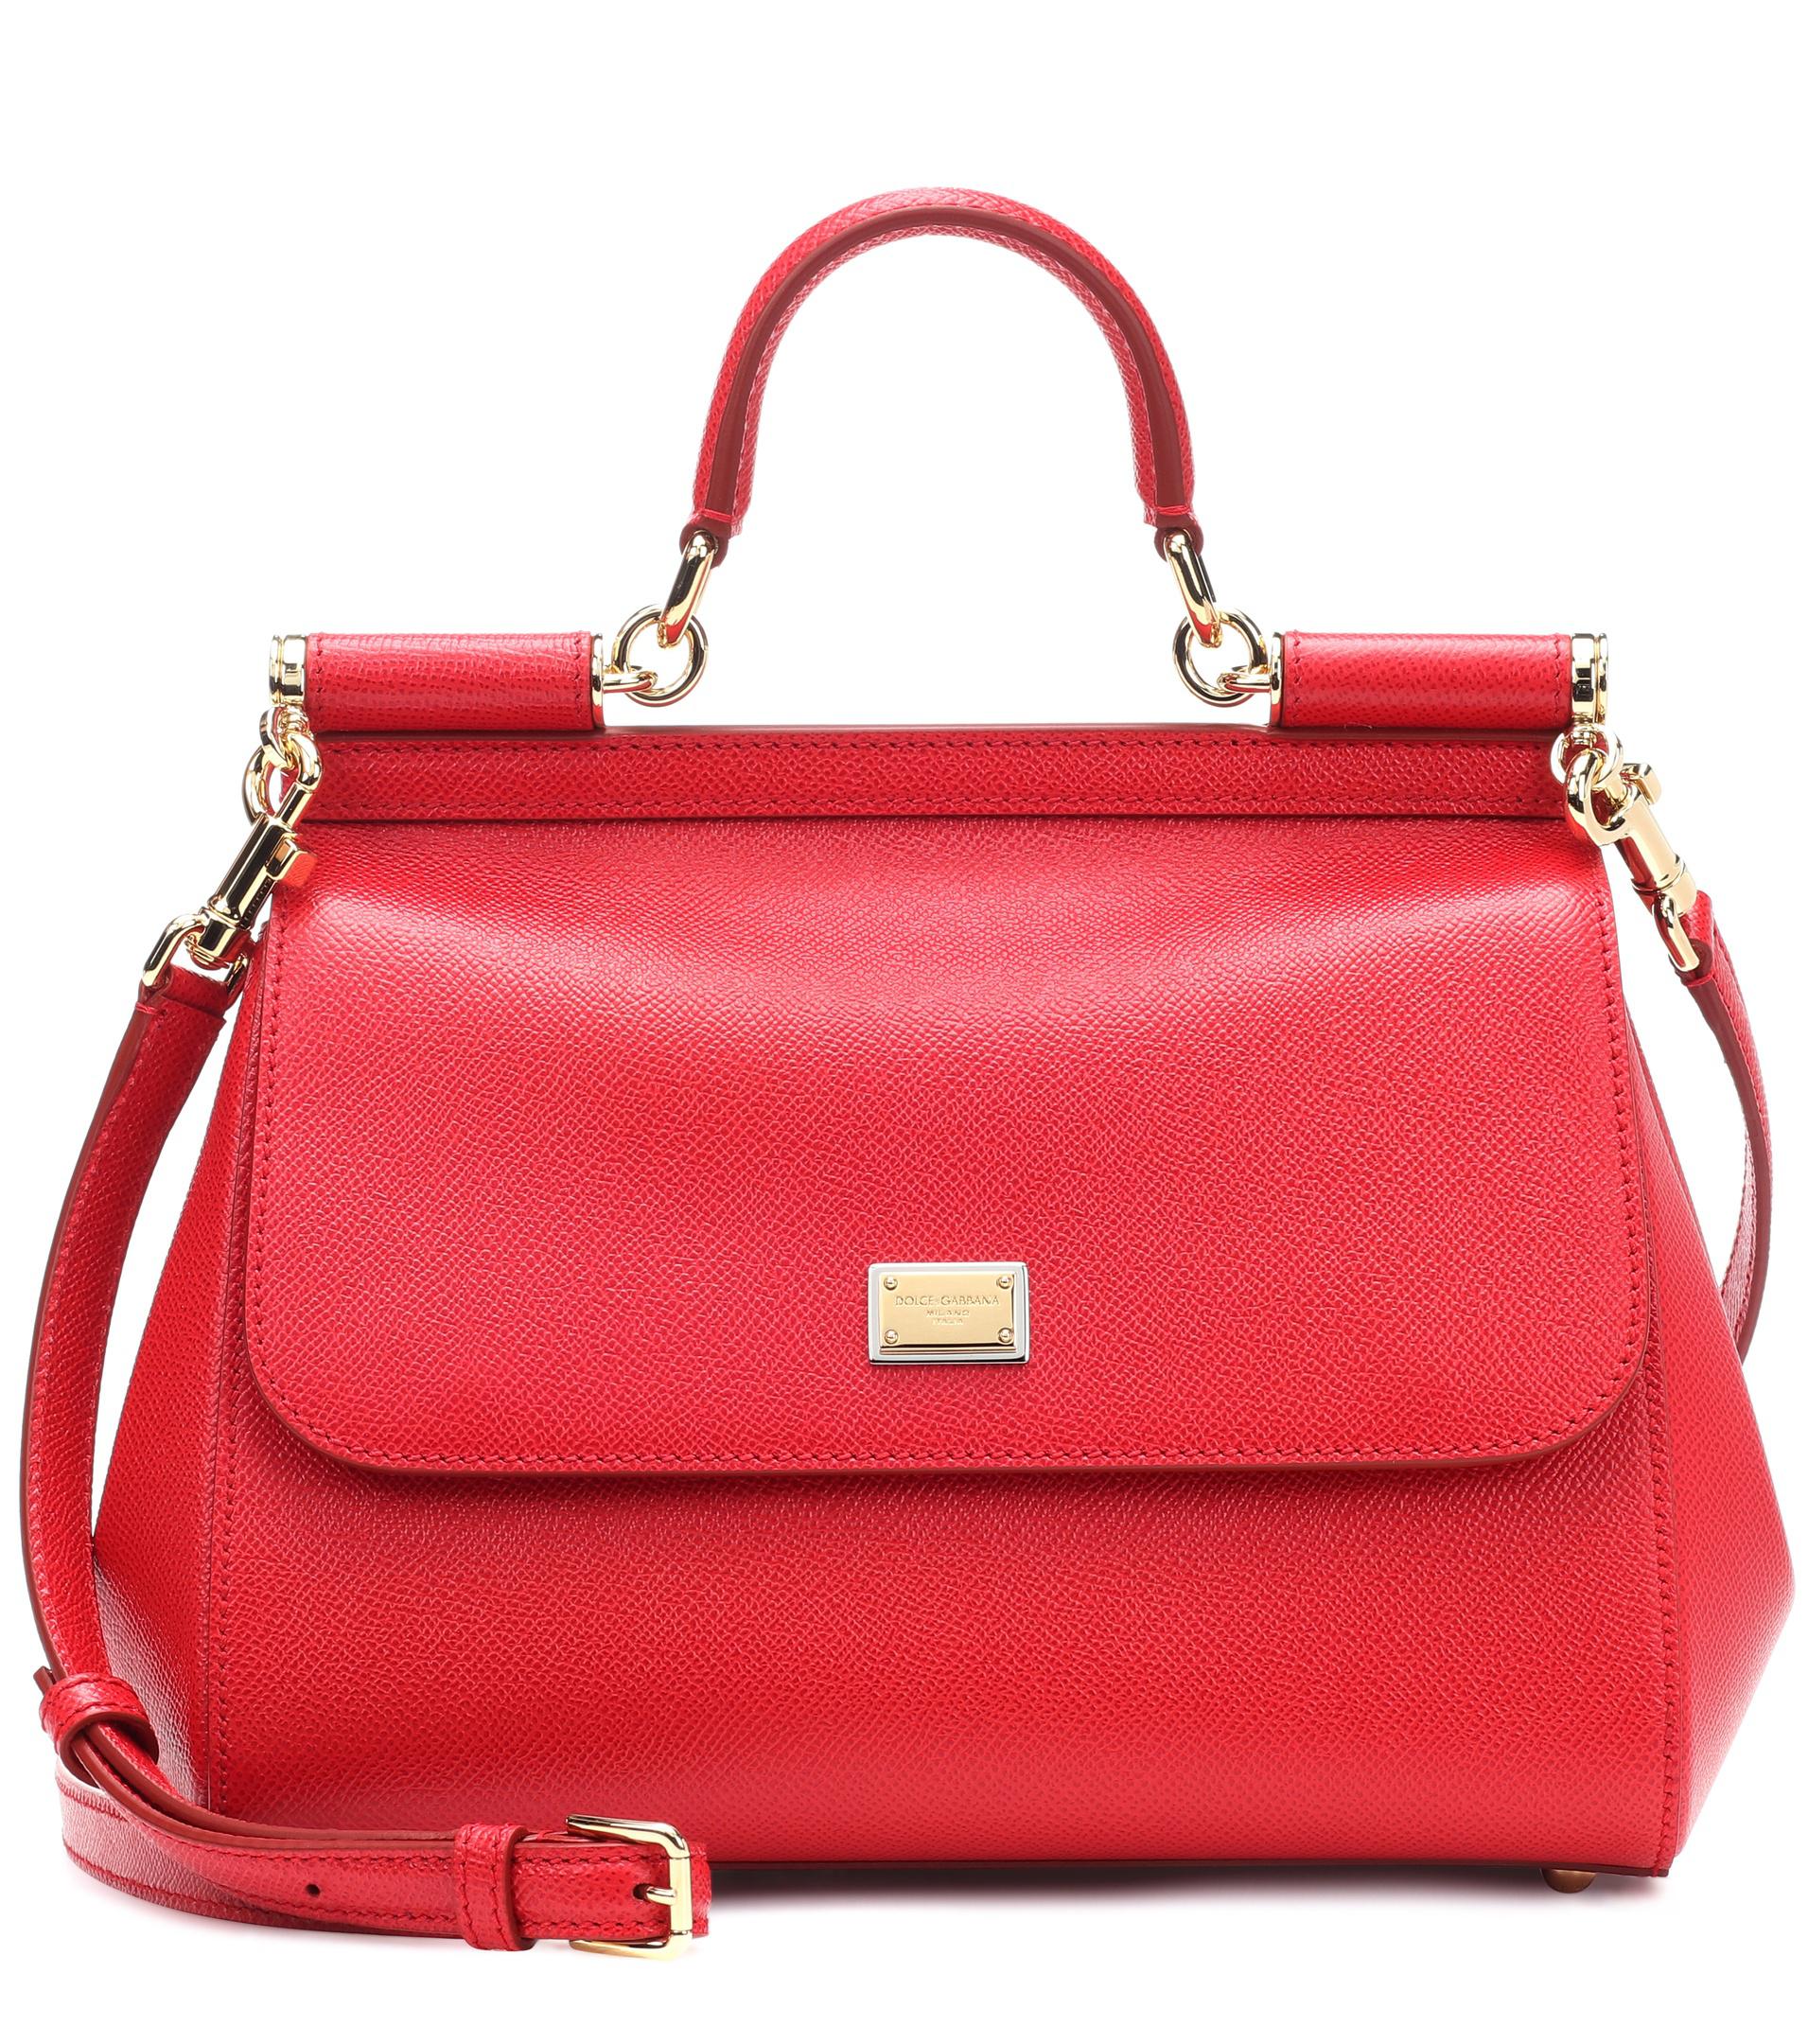 Lyst - Dolce & Gabbana Miss Sicily Medium Leather Shoulder Bag in ...